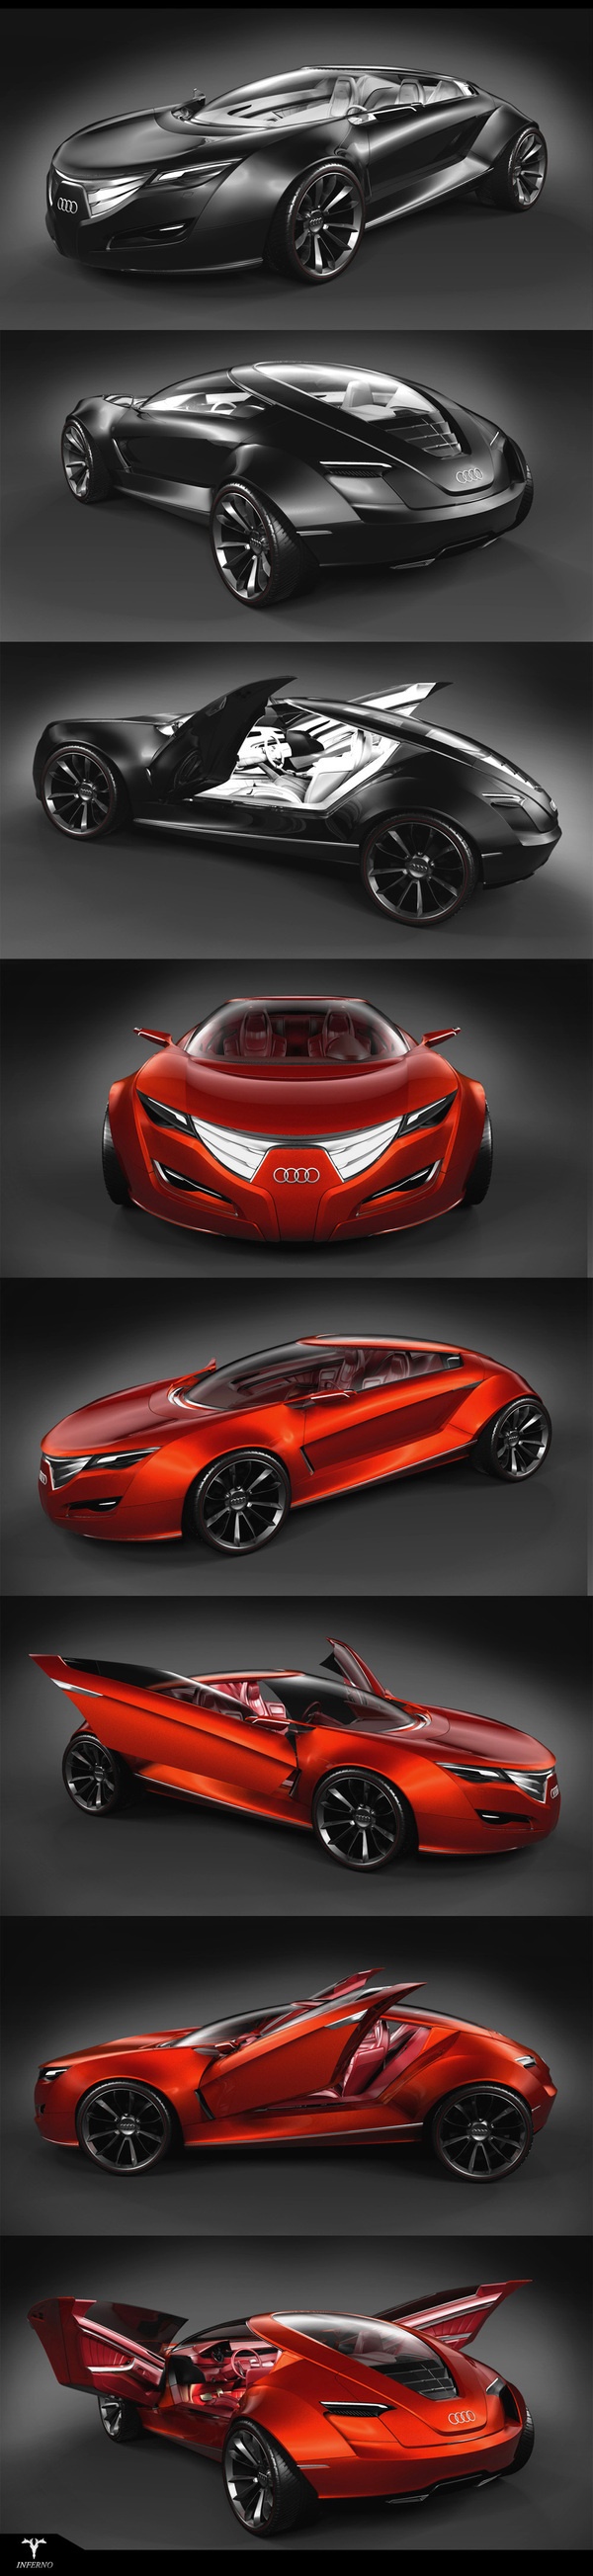 Concept car - nice image